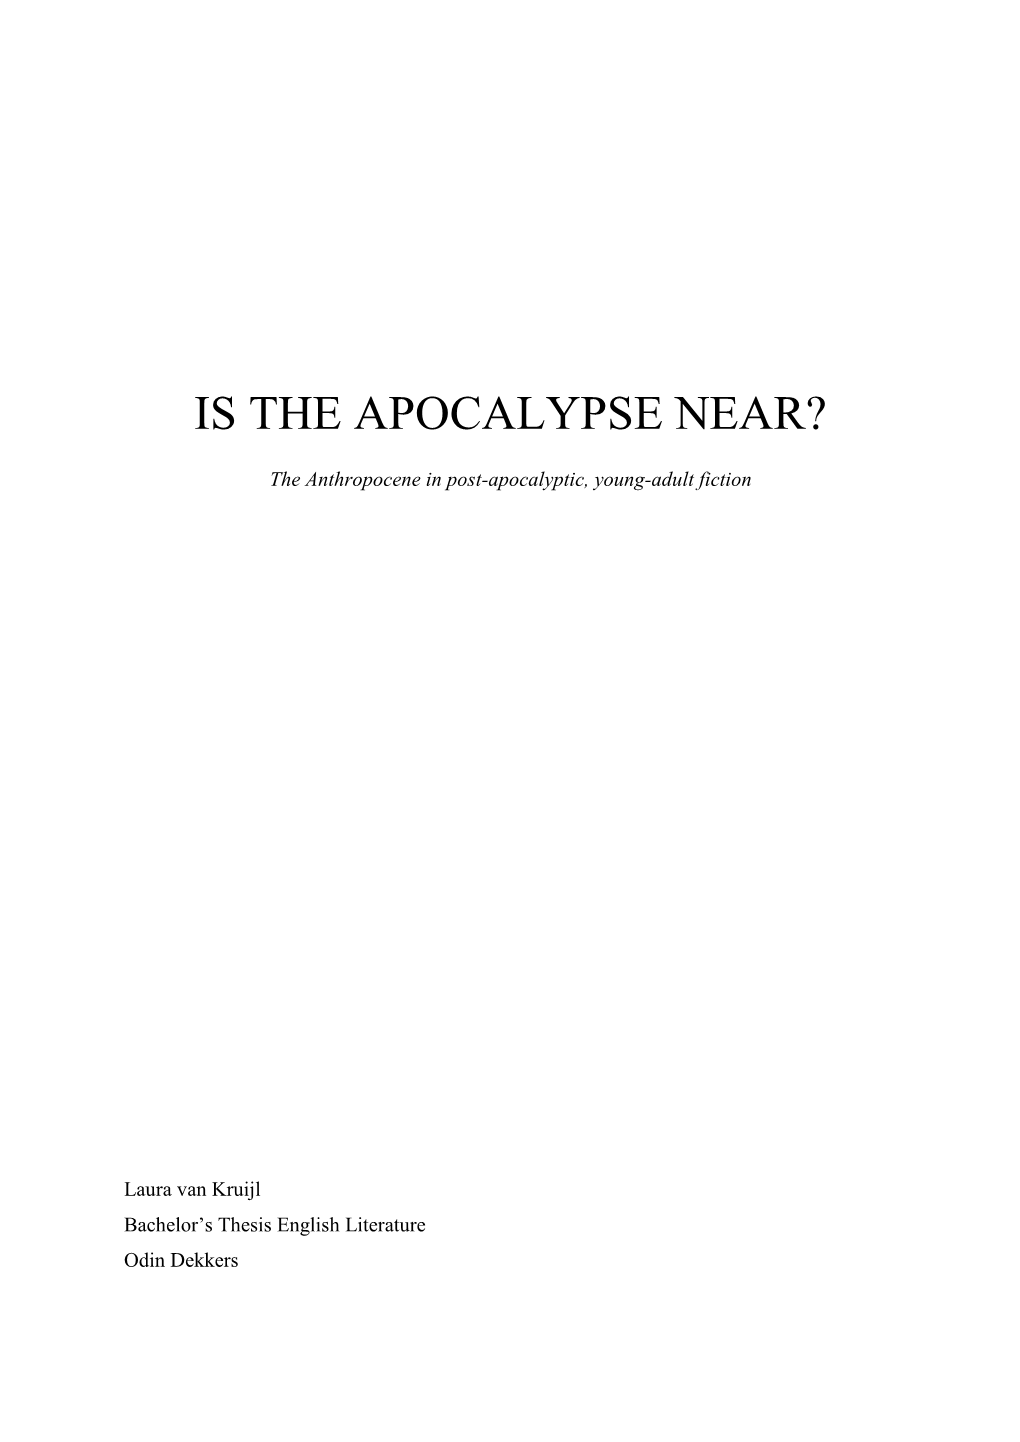 Is the Apocalypse Near?